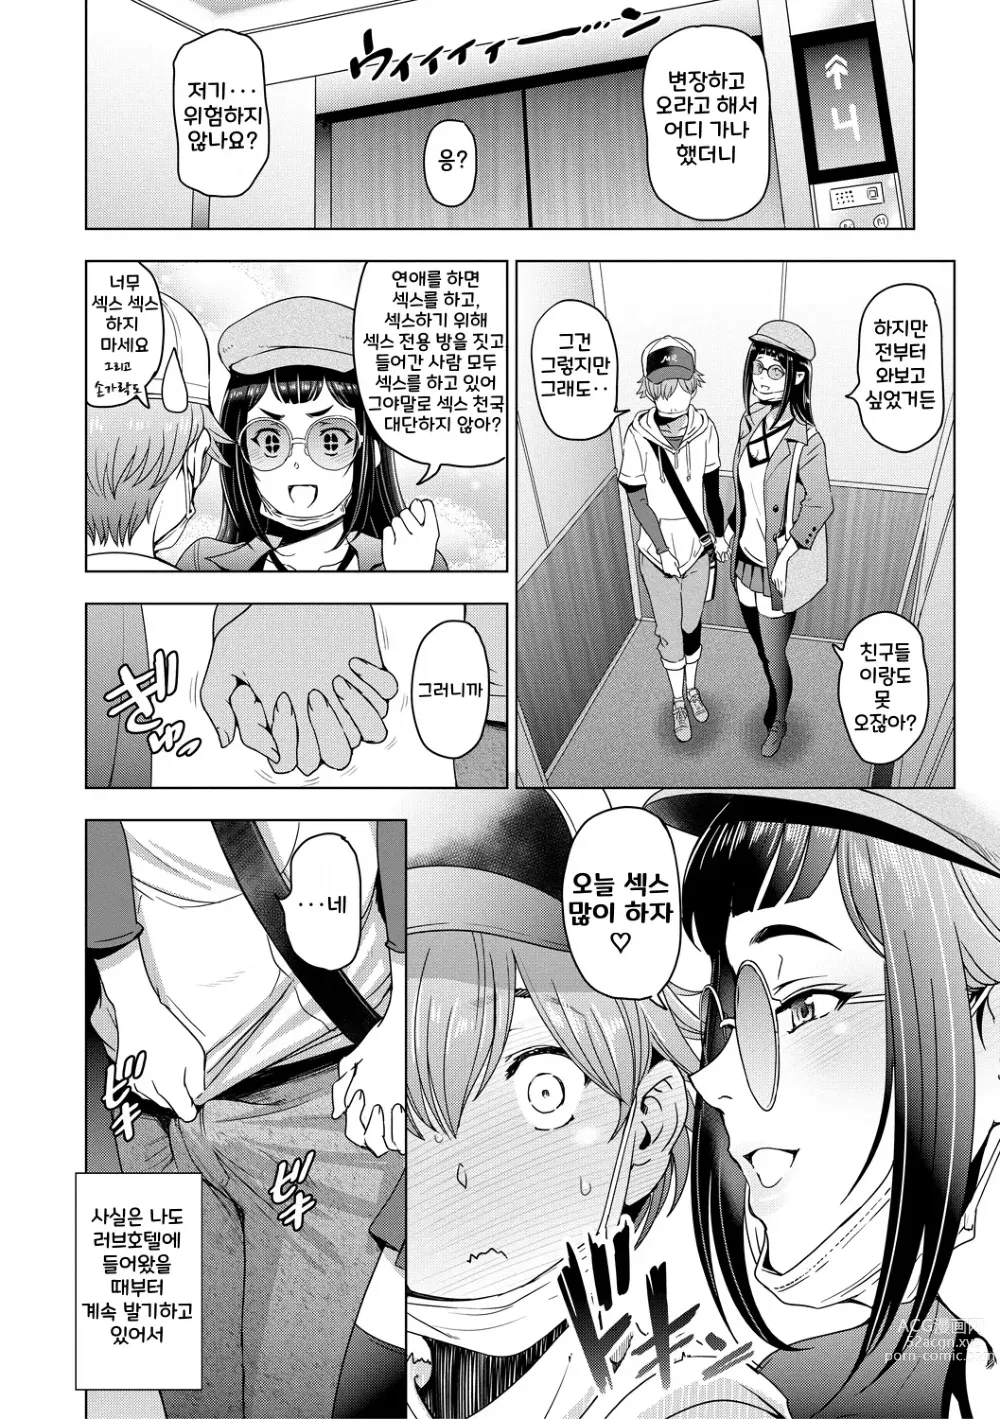 Page 28 of manga Nee Ecchi shichao kka - Hey, lets have sex.